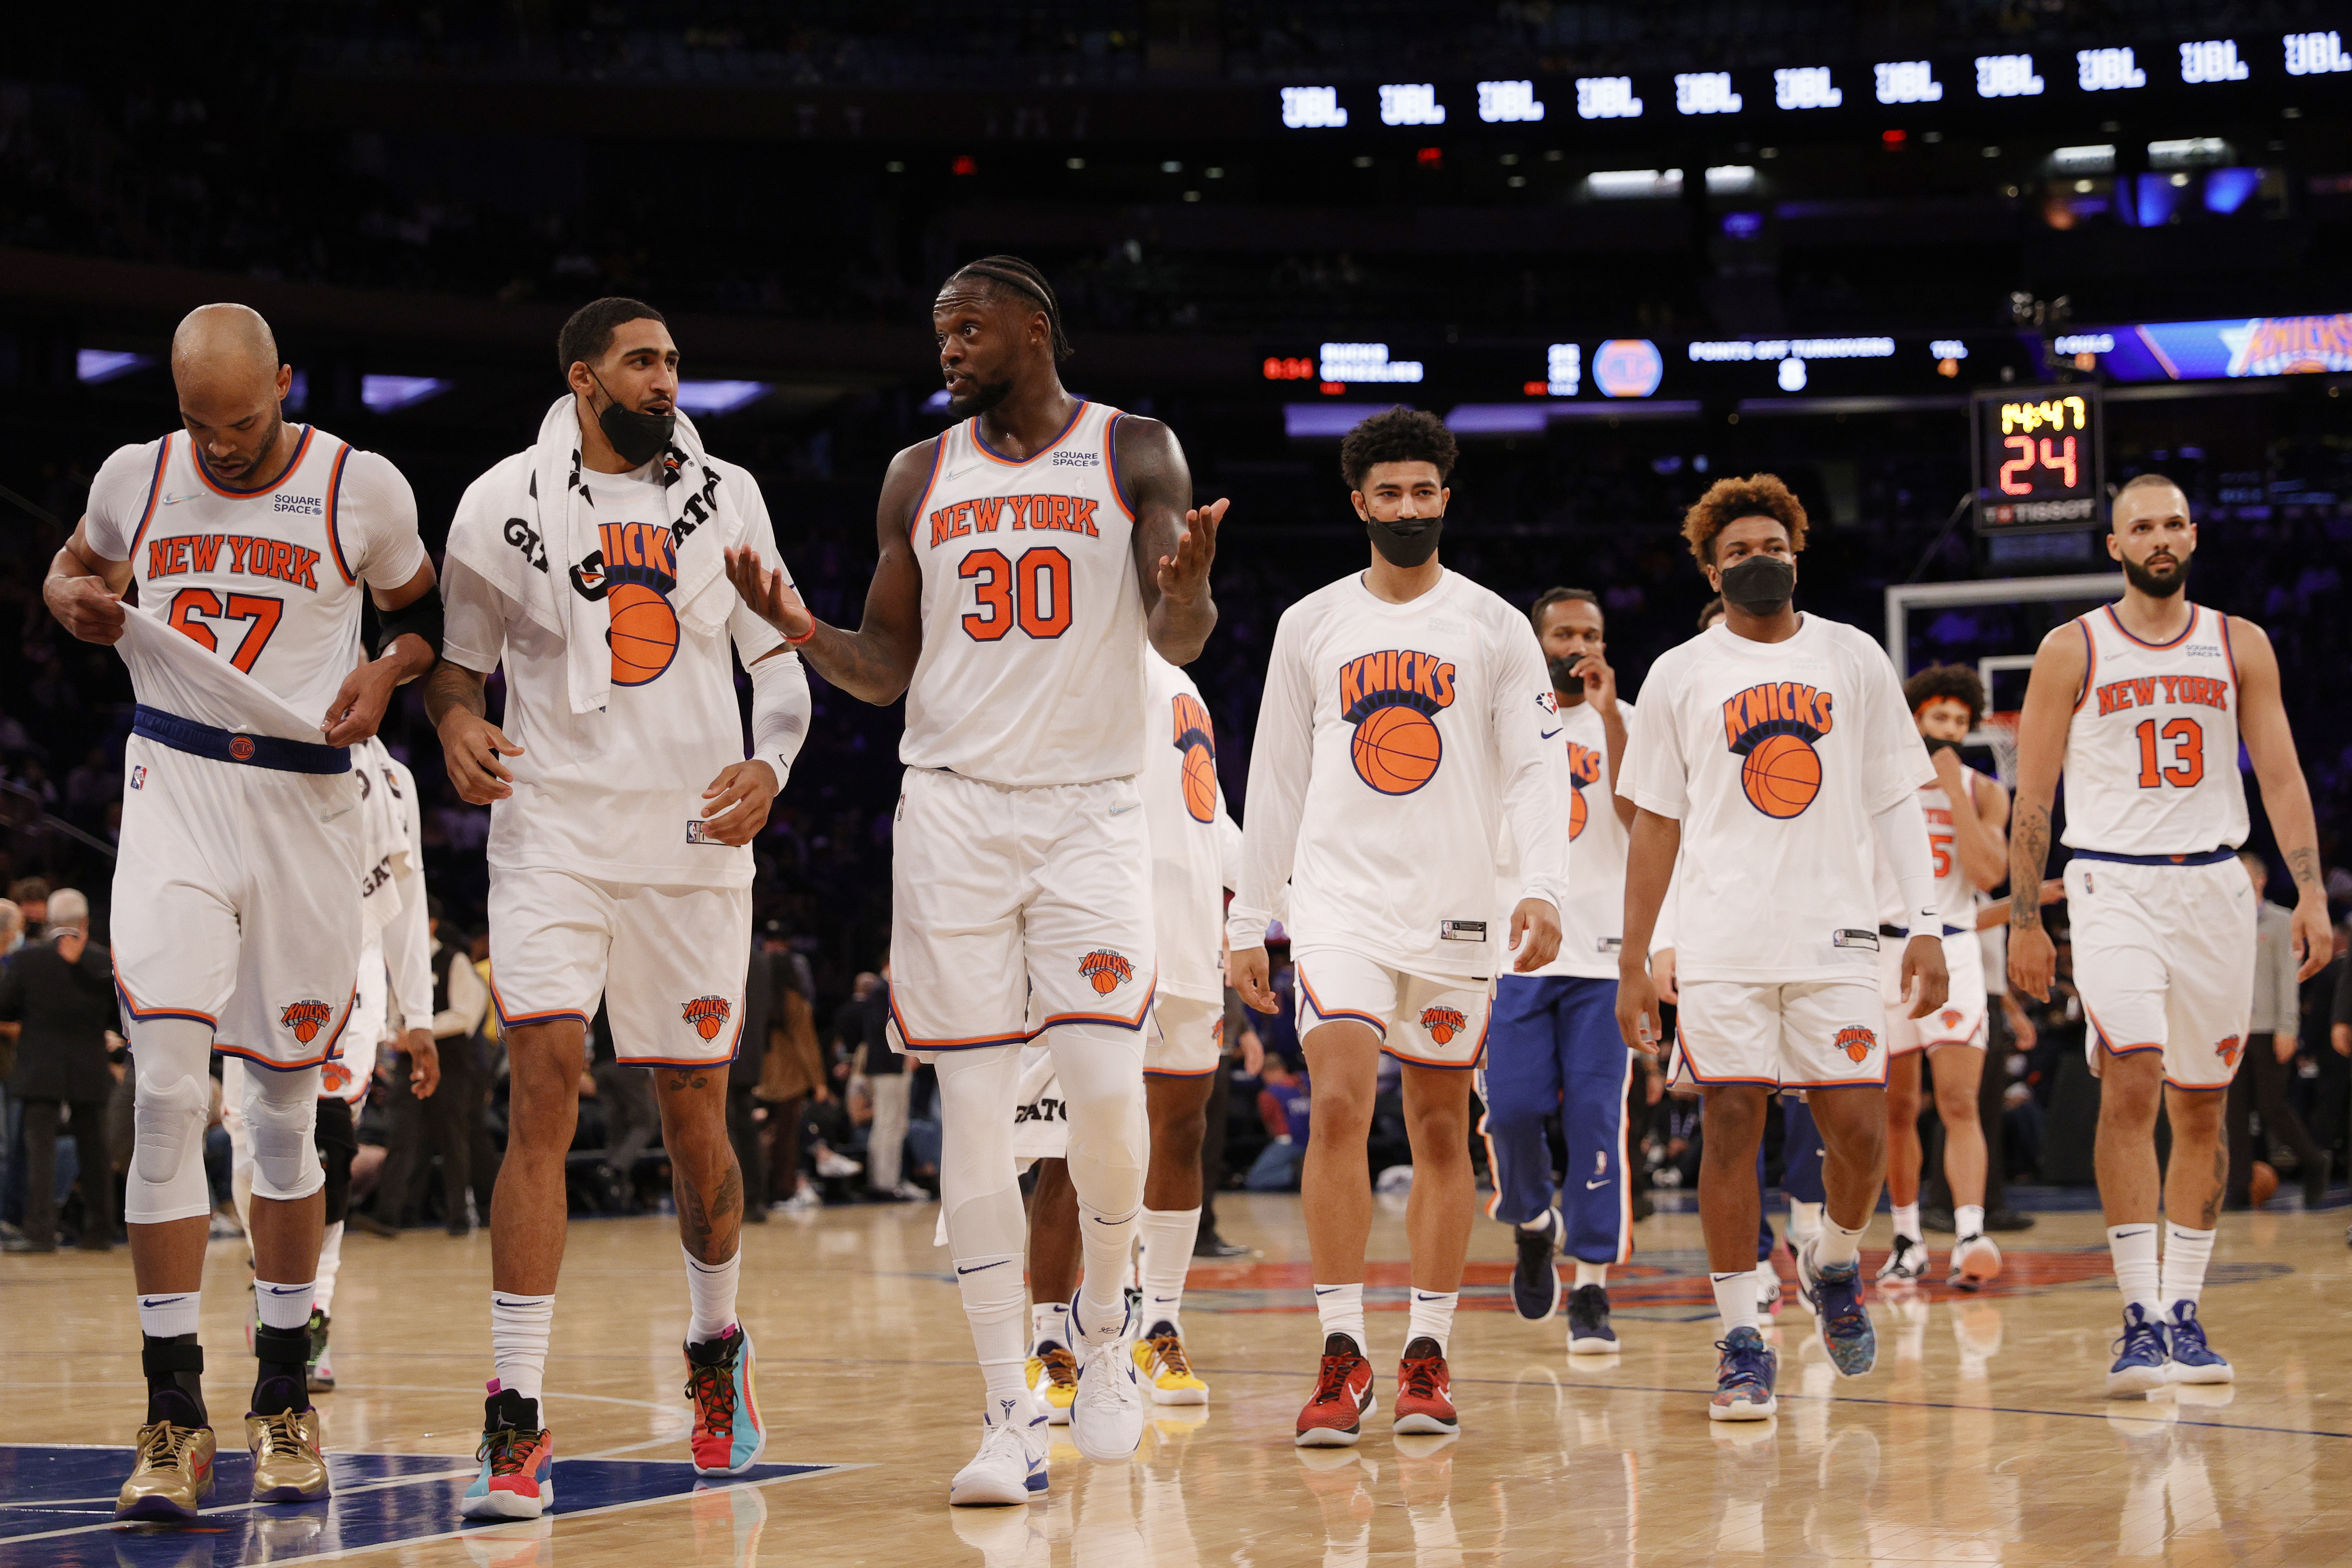 Chauncey Billups New York Knicks Fanatics Authentic Autographed